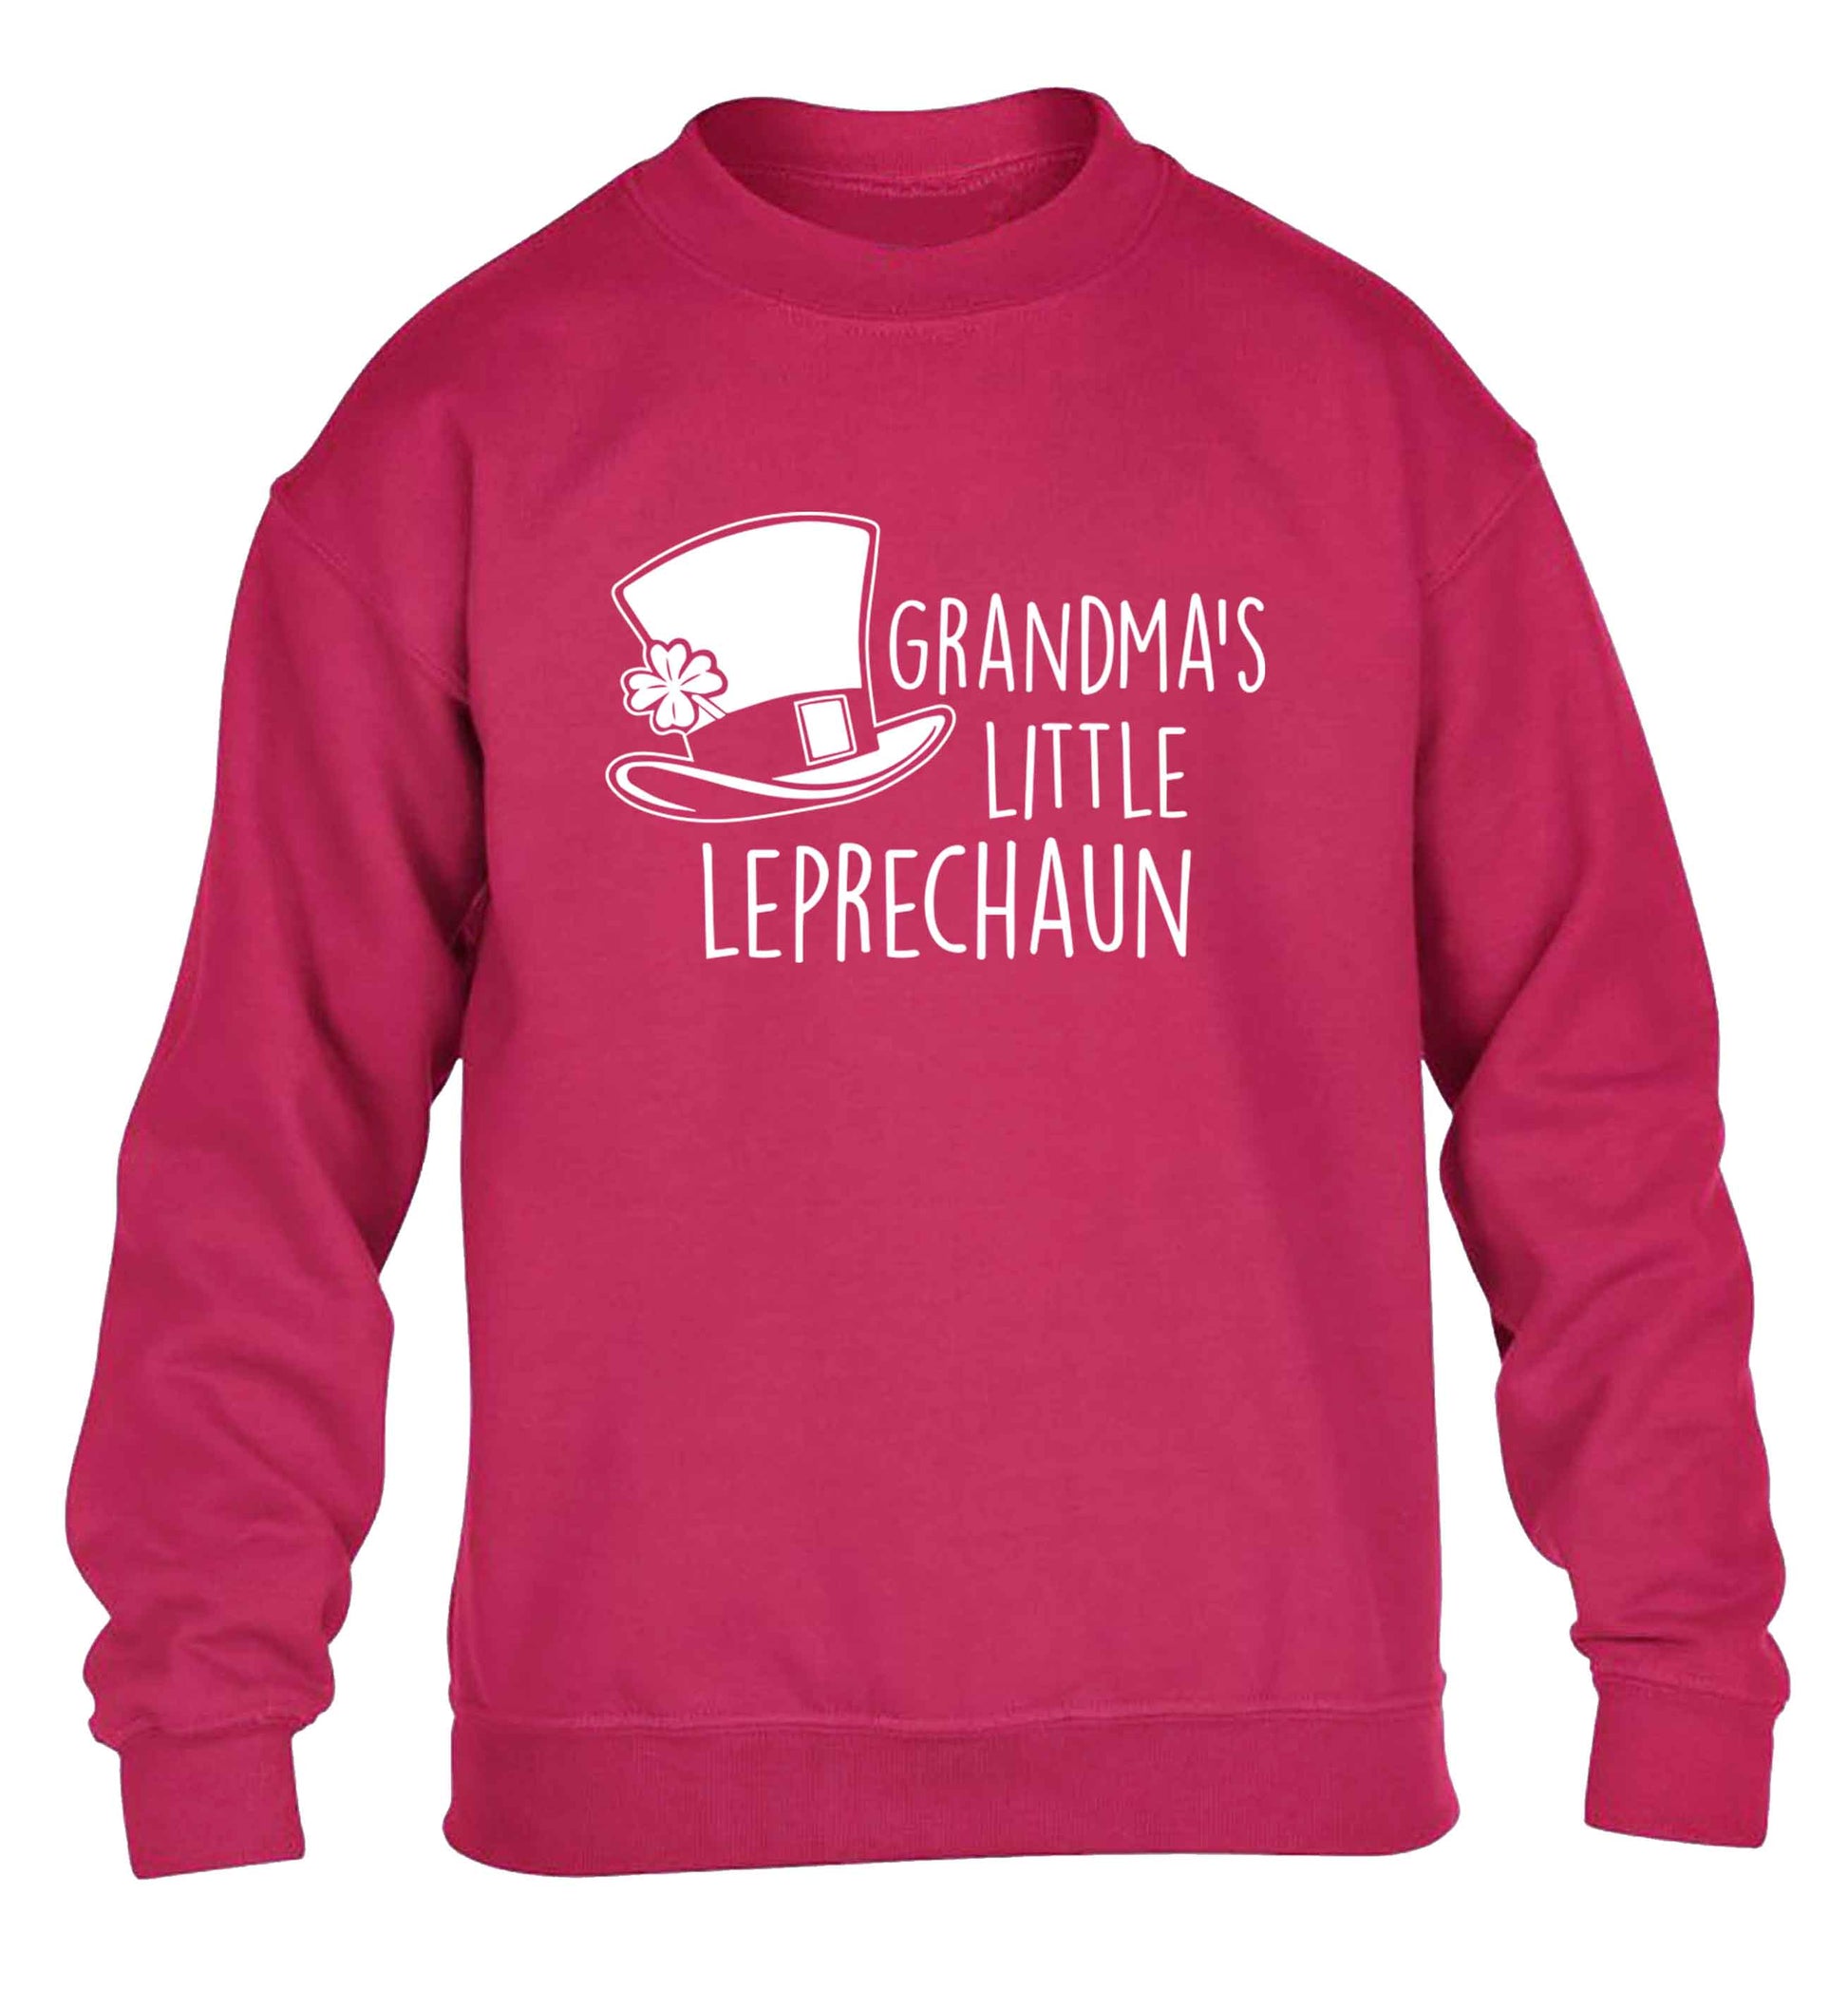 Grandma's little leprechaun children's pink sweater 12-13 Years